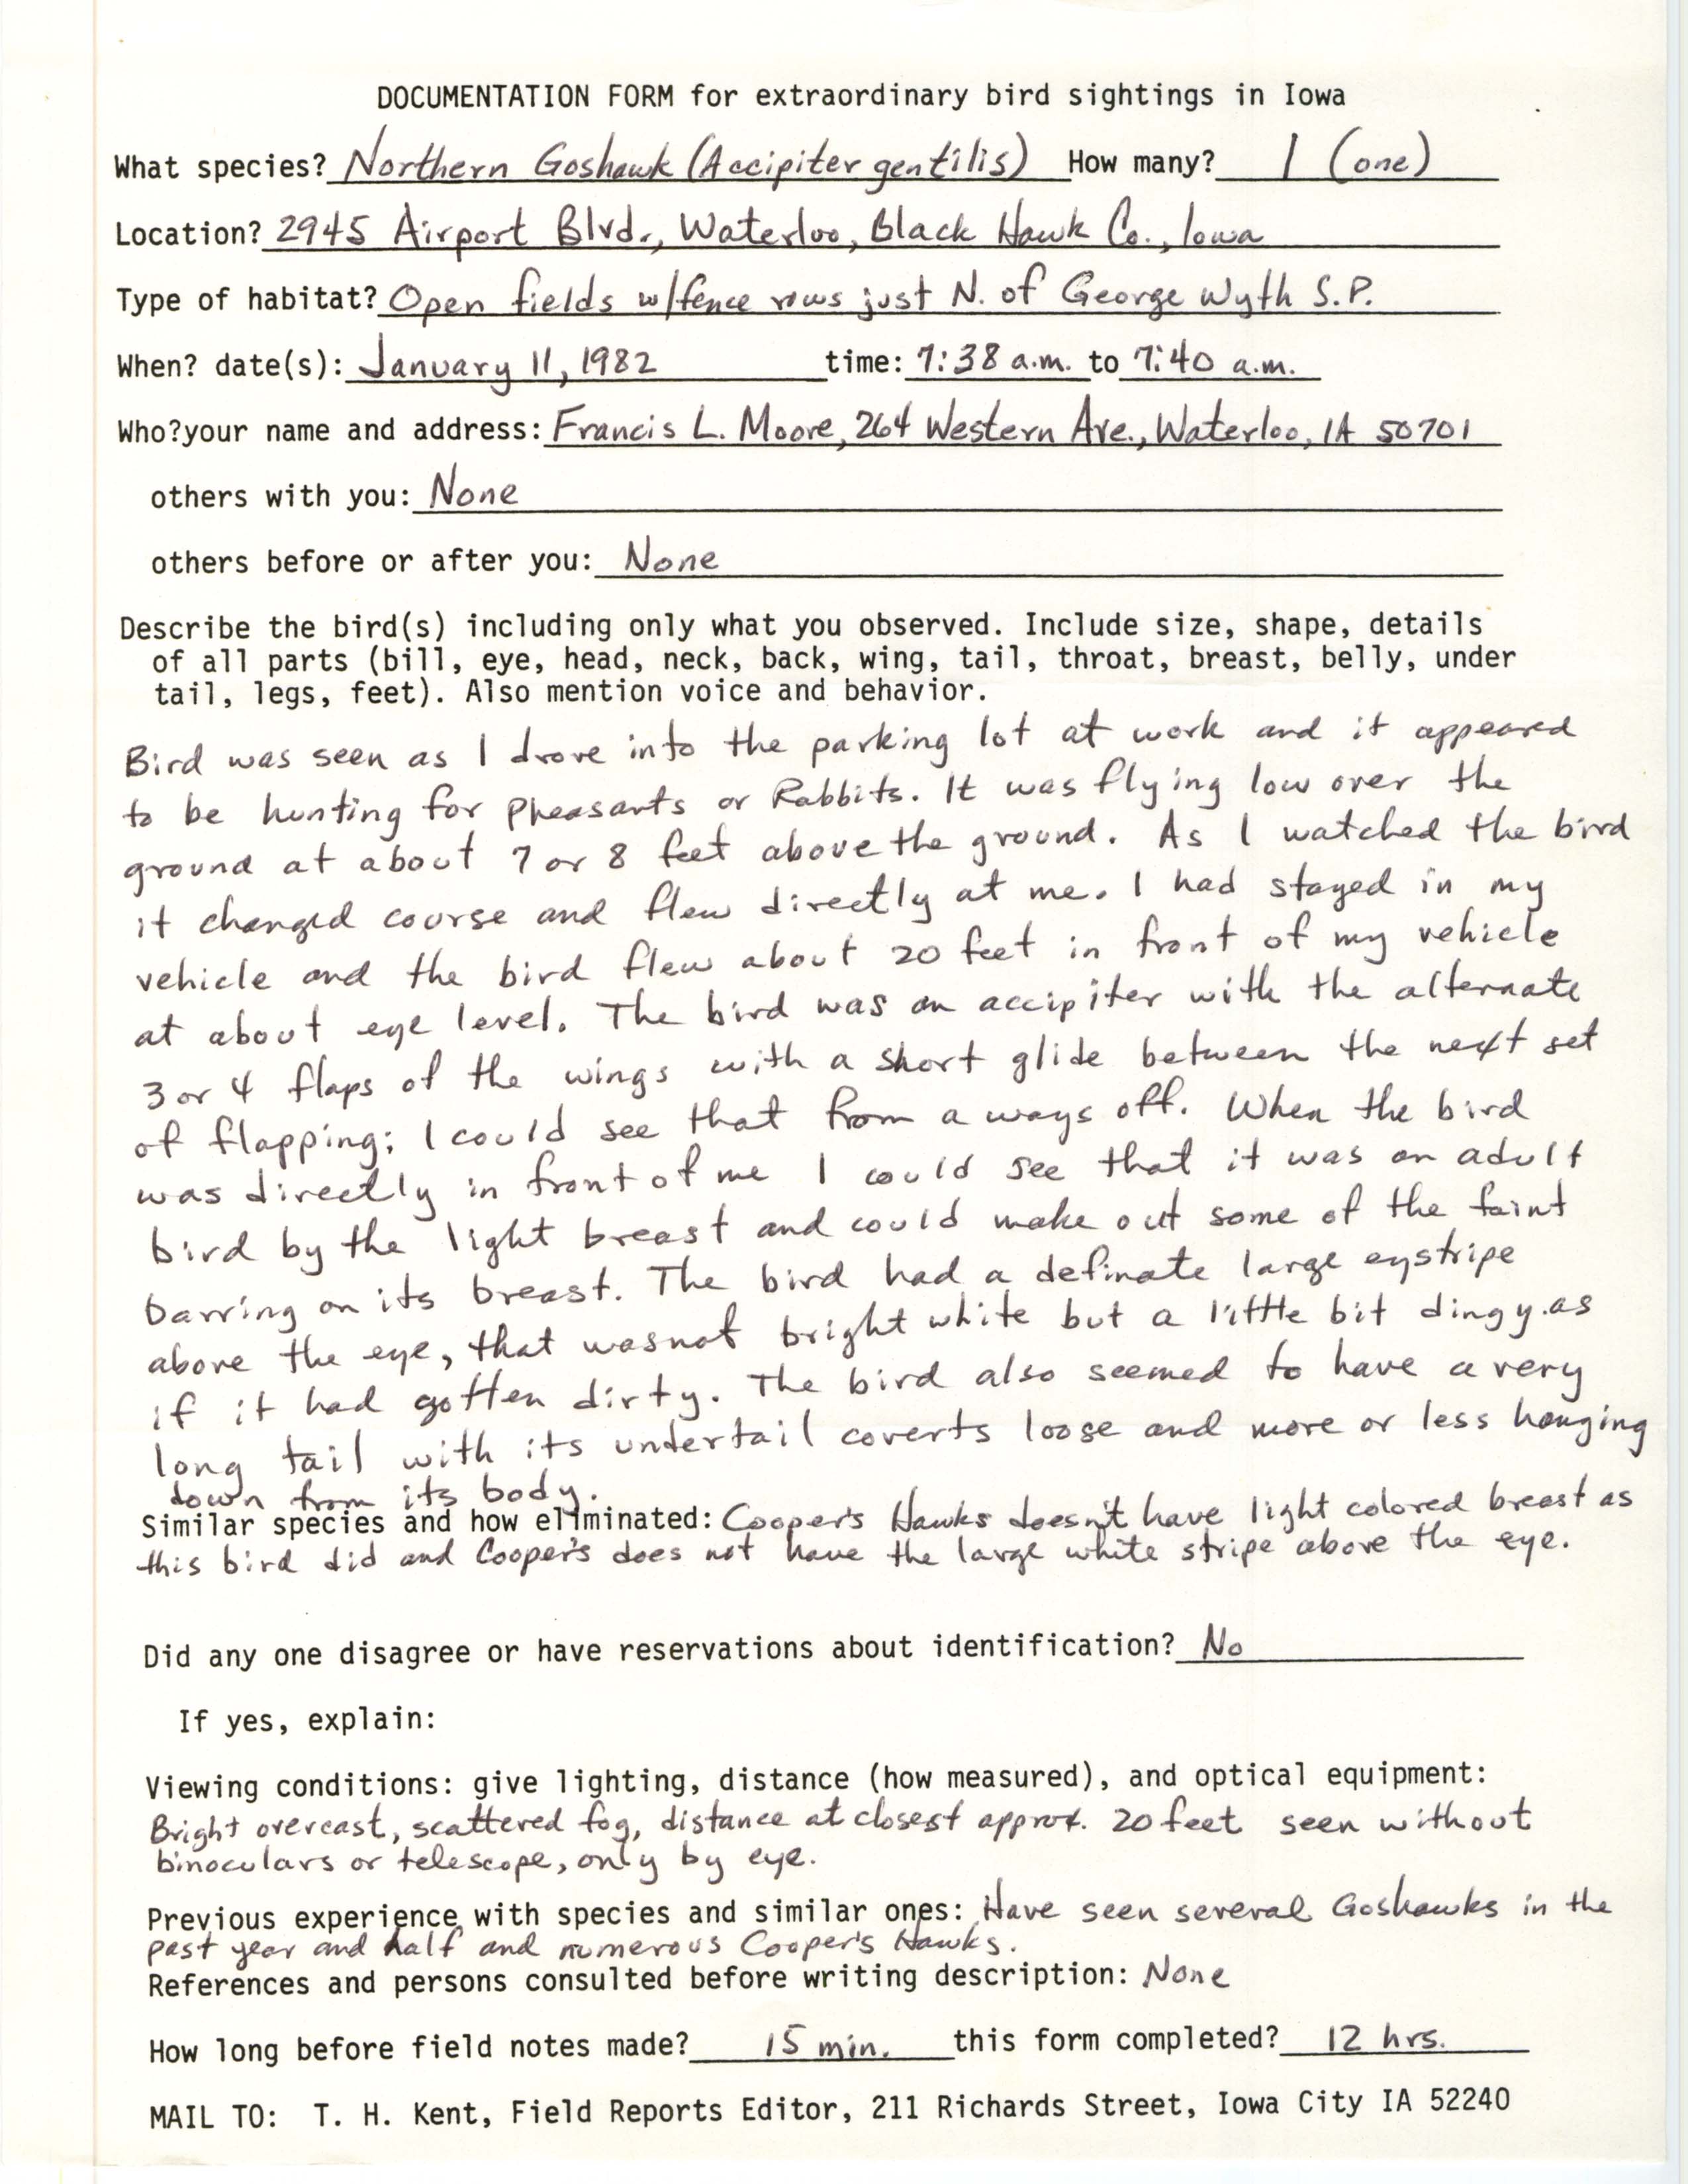 Rare bird documentation form for Northern Goshawk at Waterloo, 1982